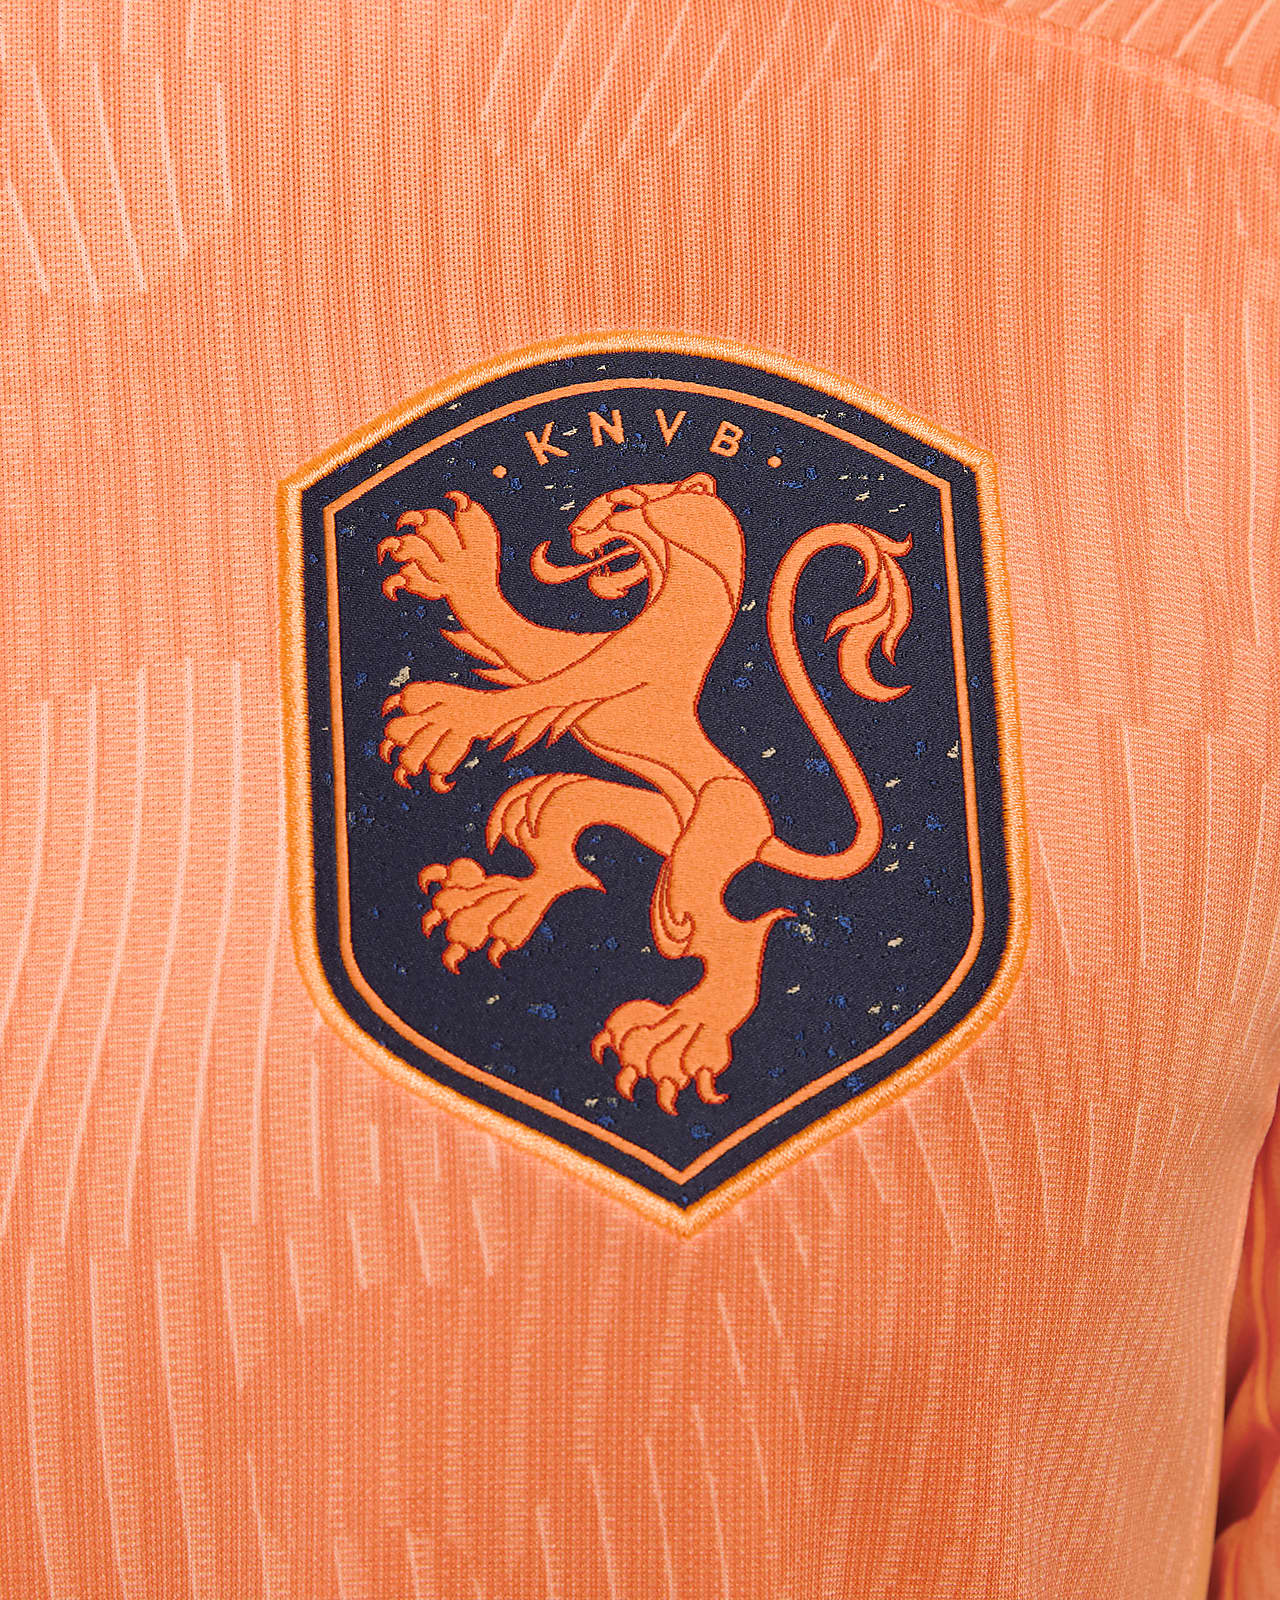 Netherlands 2022/23 Stadium Home Men's Nike Dri-FIT Long-Sleeve Soccer  Jersey.